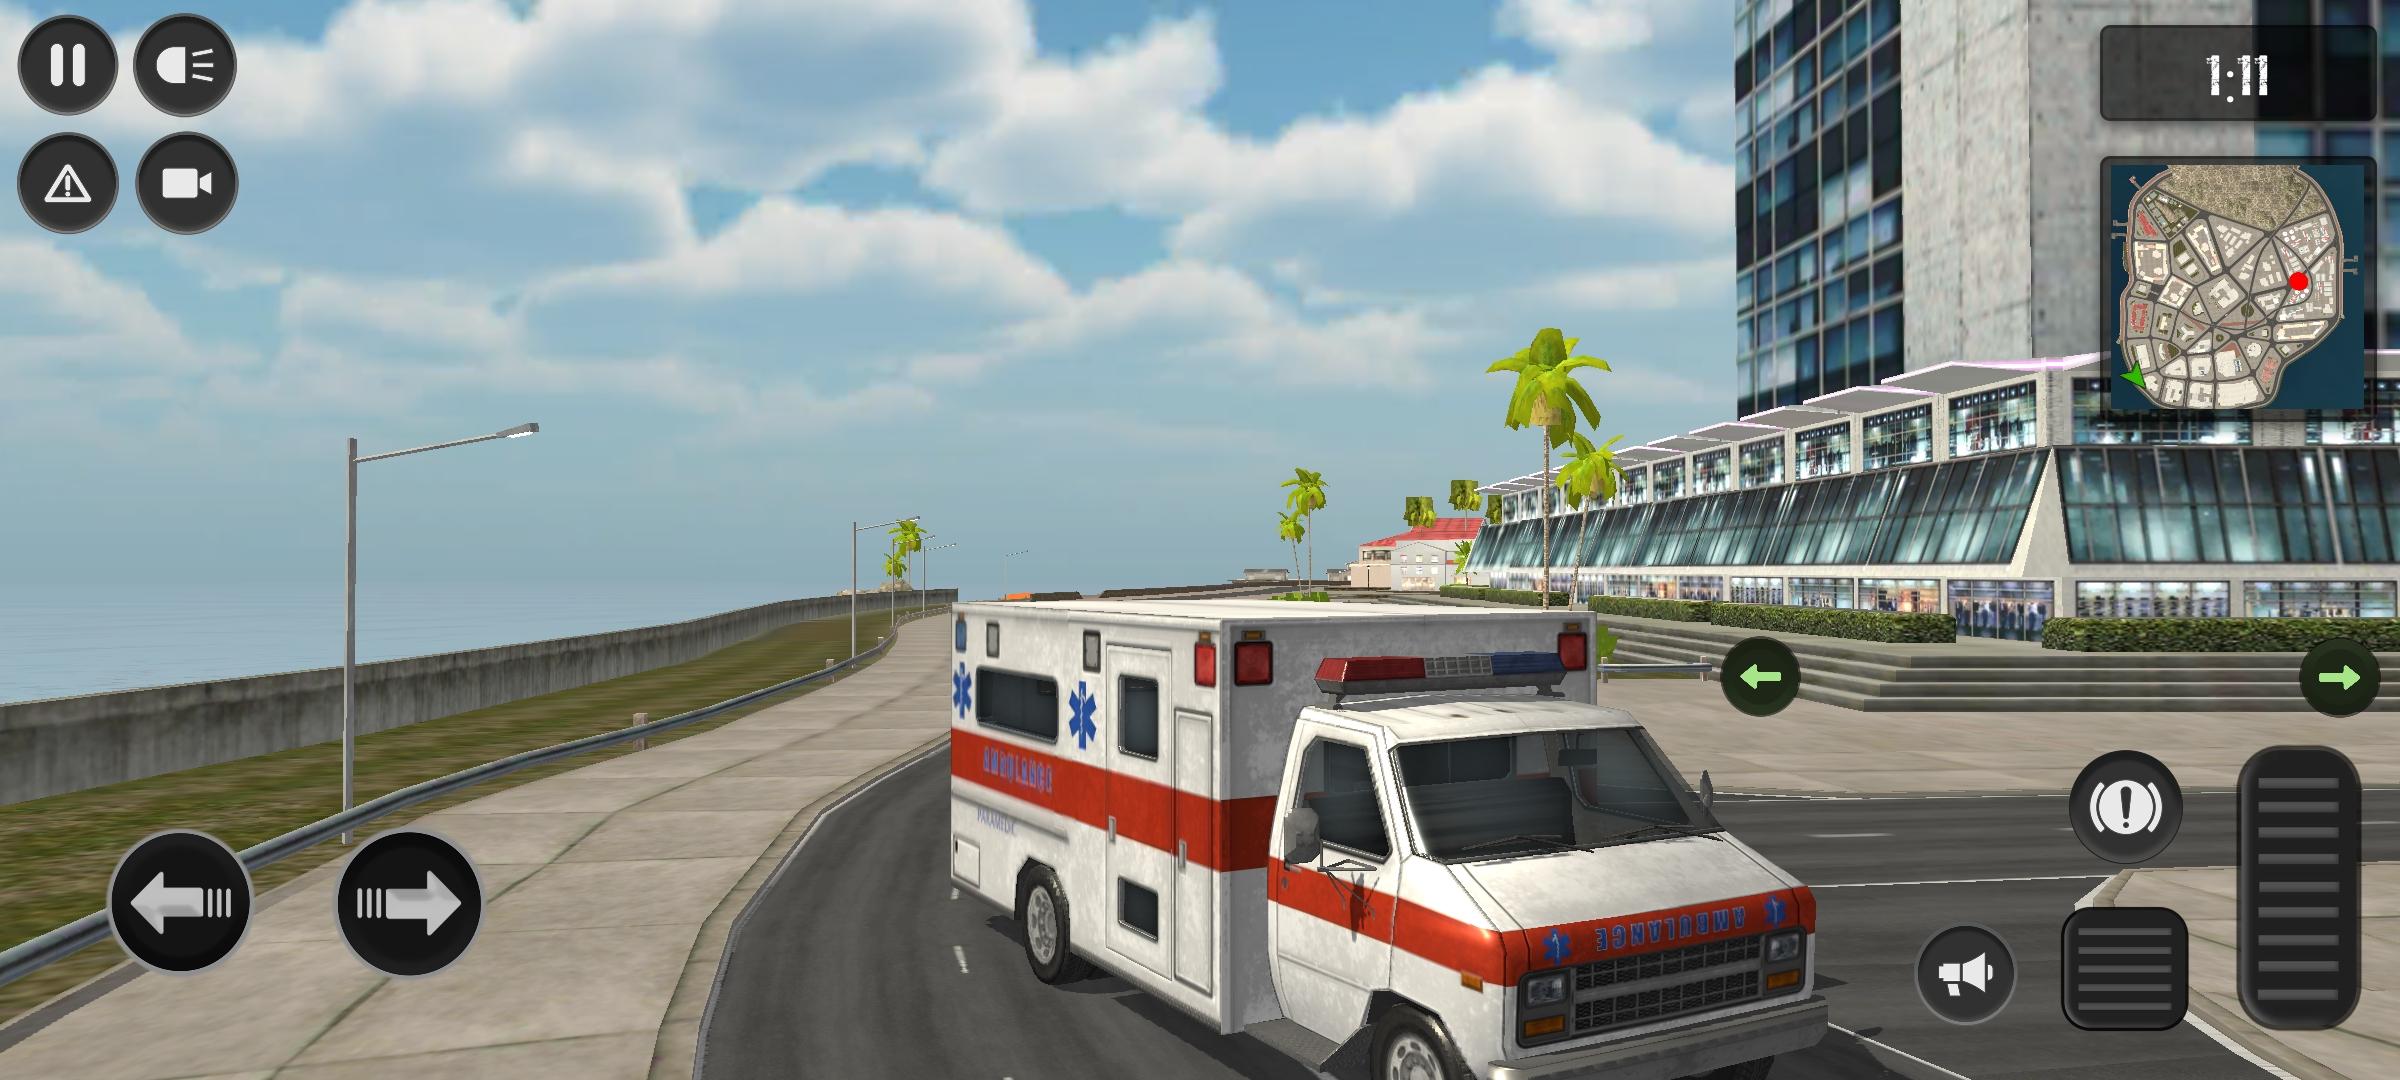 Fast simulator. Симулятор скорой помощи. Ambulance Simulator 2018 ЗЫ.